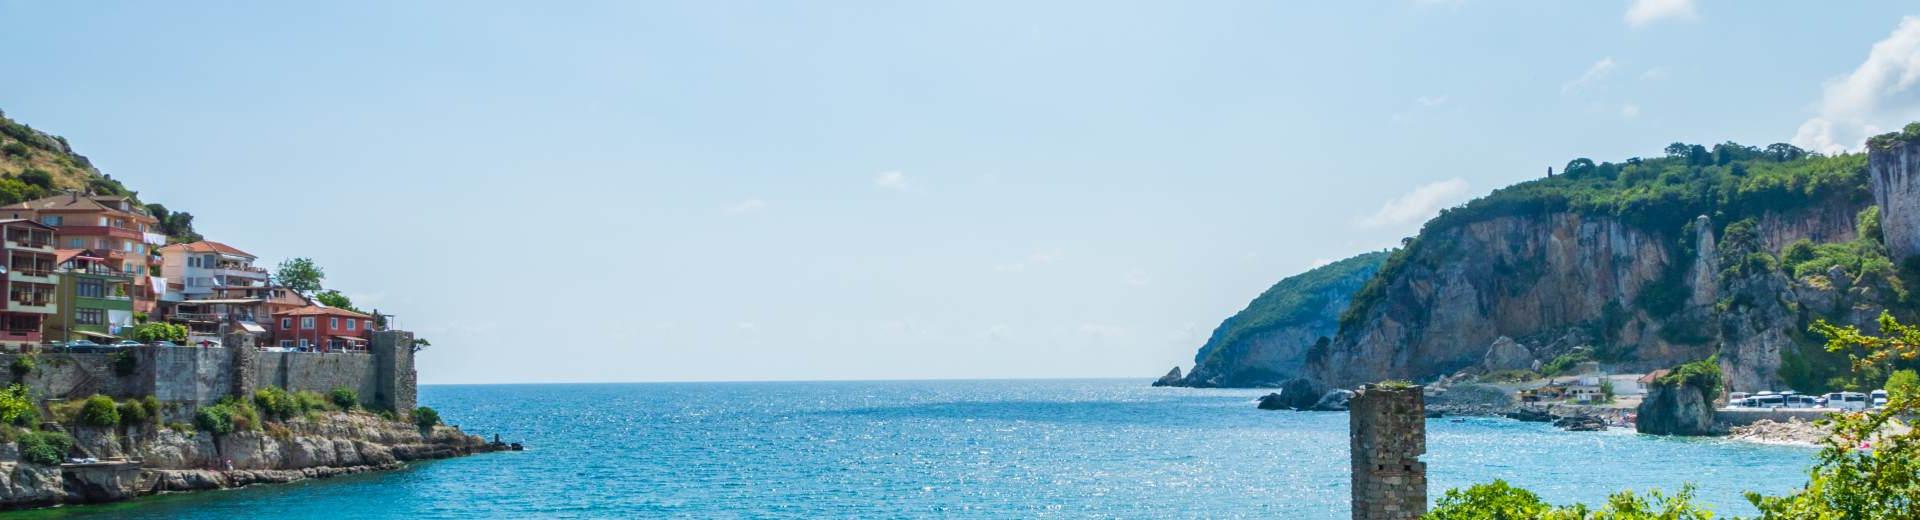 Find the perfect vacation home in the Black Sea Region - Casamundo